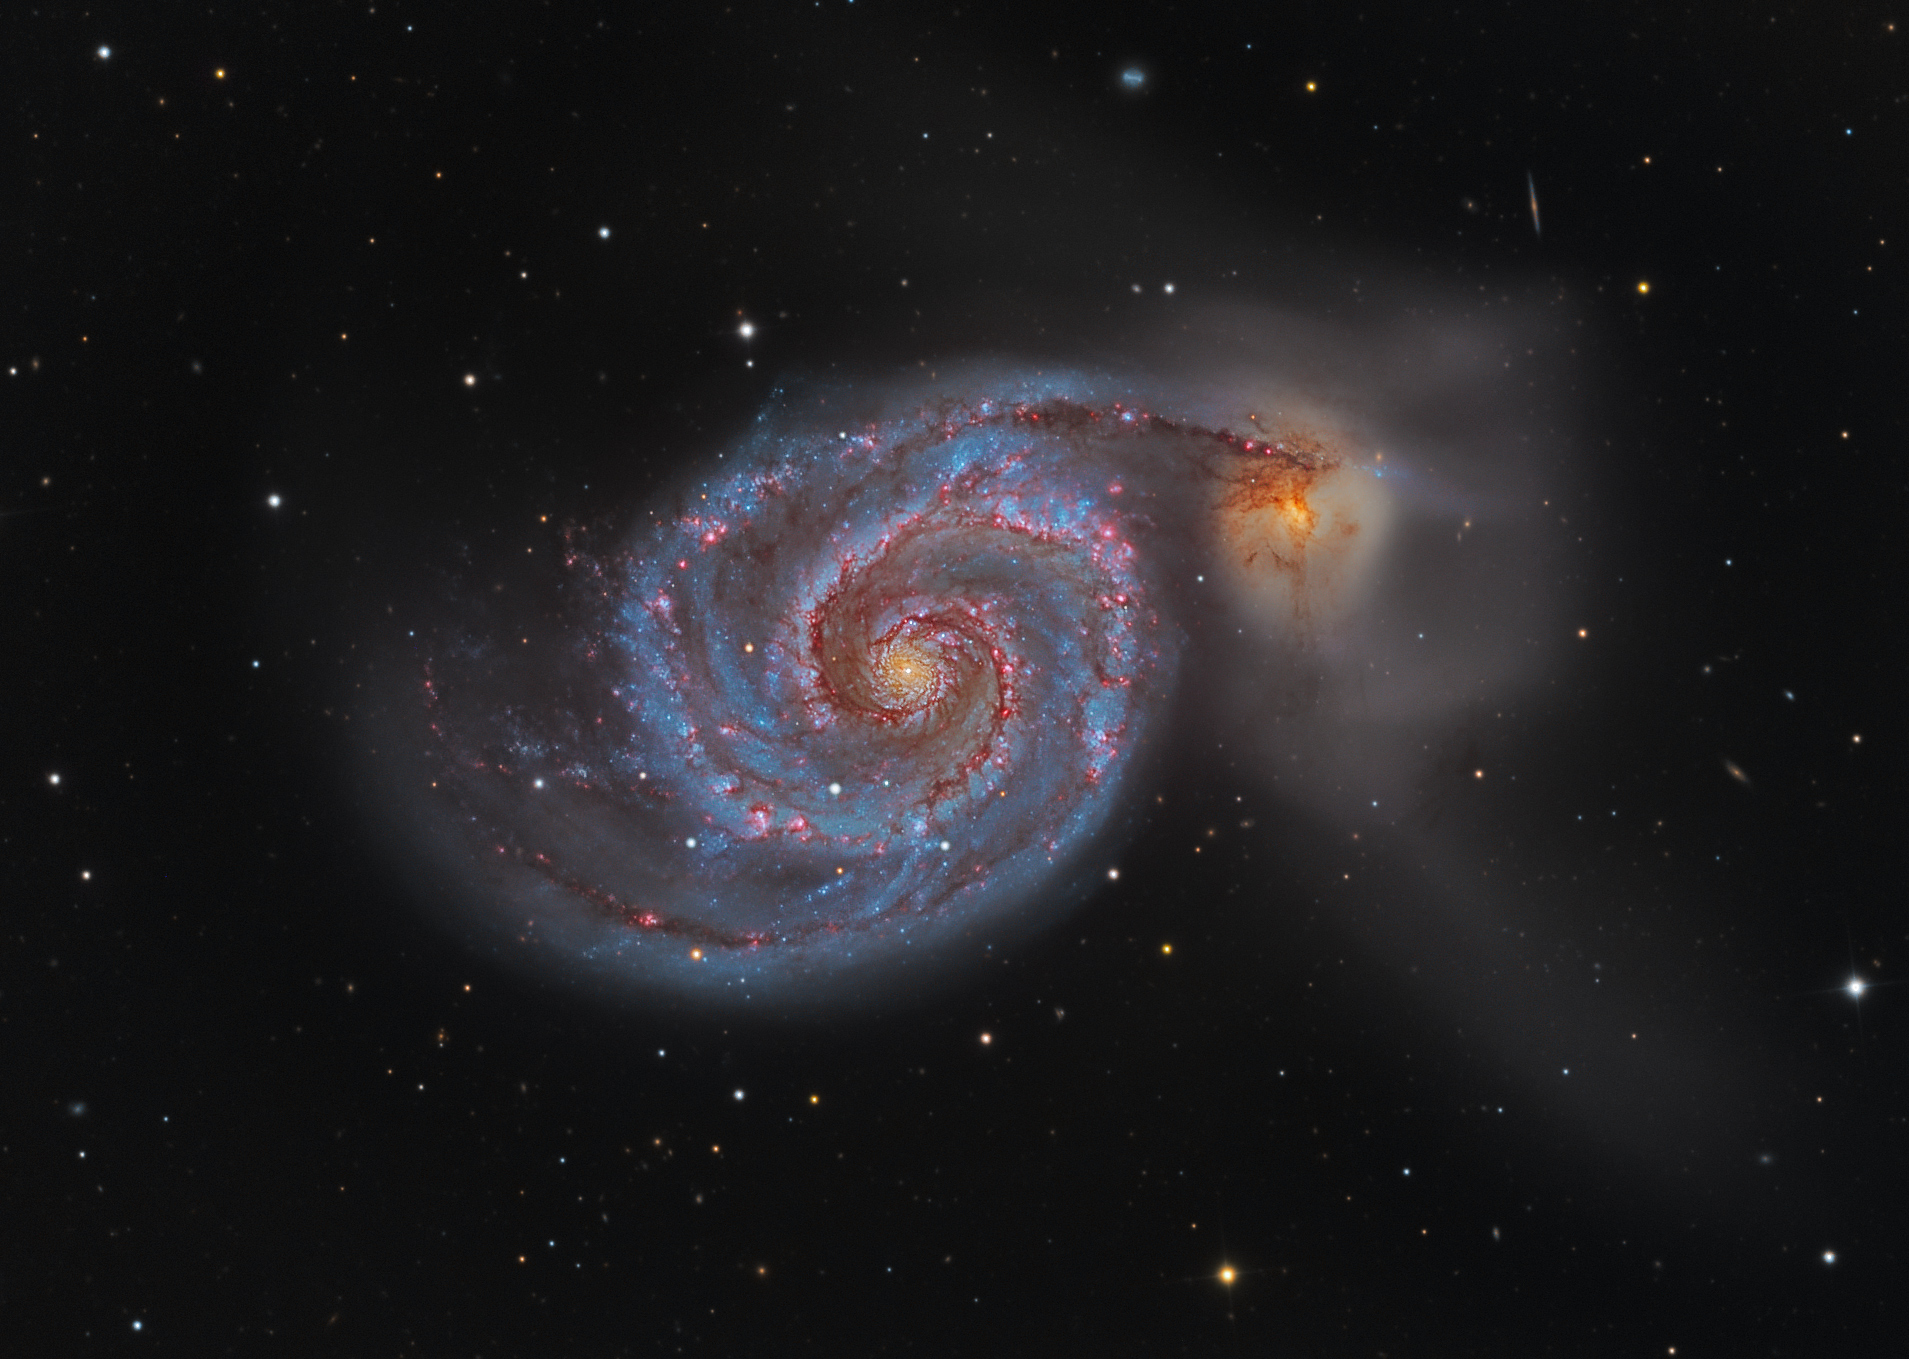 APOD: 2015 May 2 - M51: The Whirlpool Galaxy